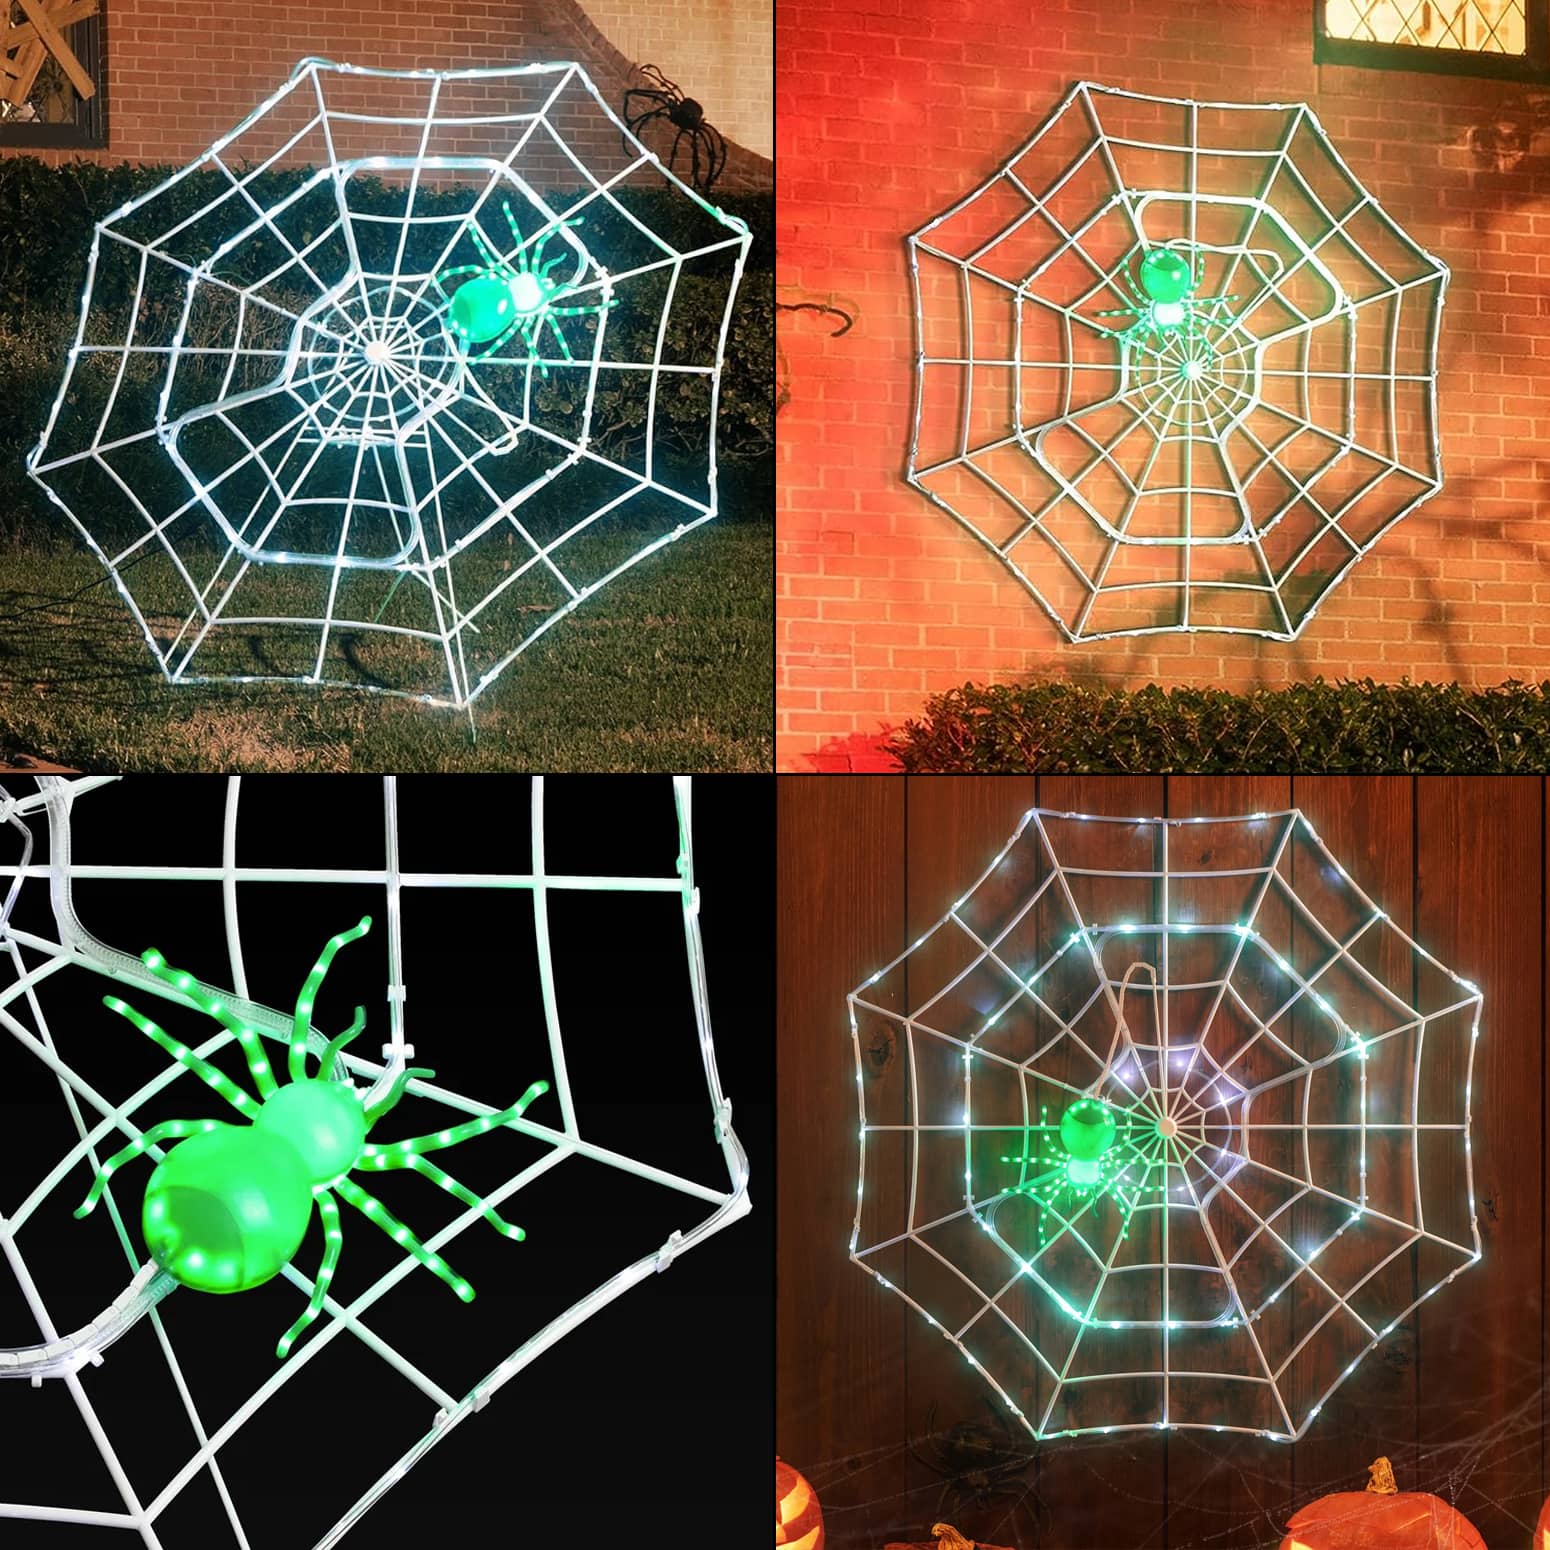 Giant Illuminated Spider Web With Animated Crawling Spider